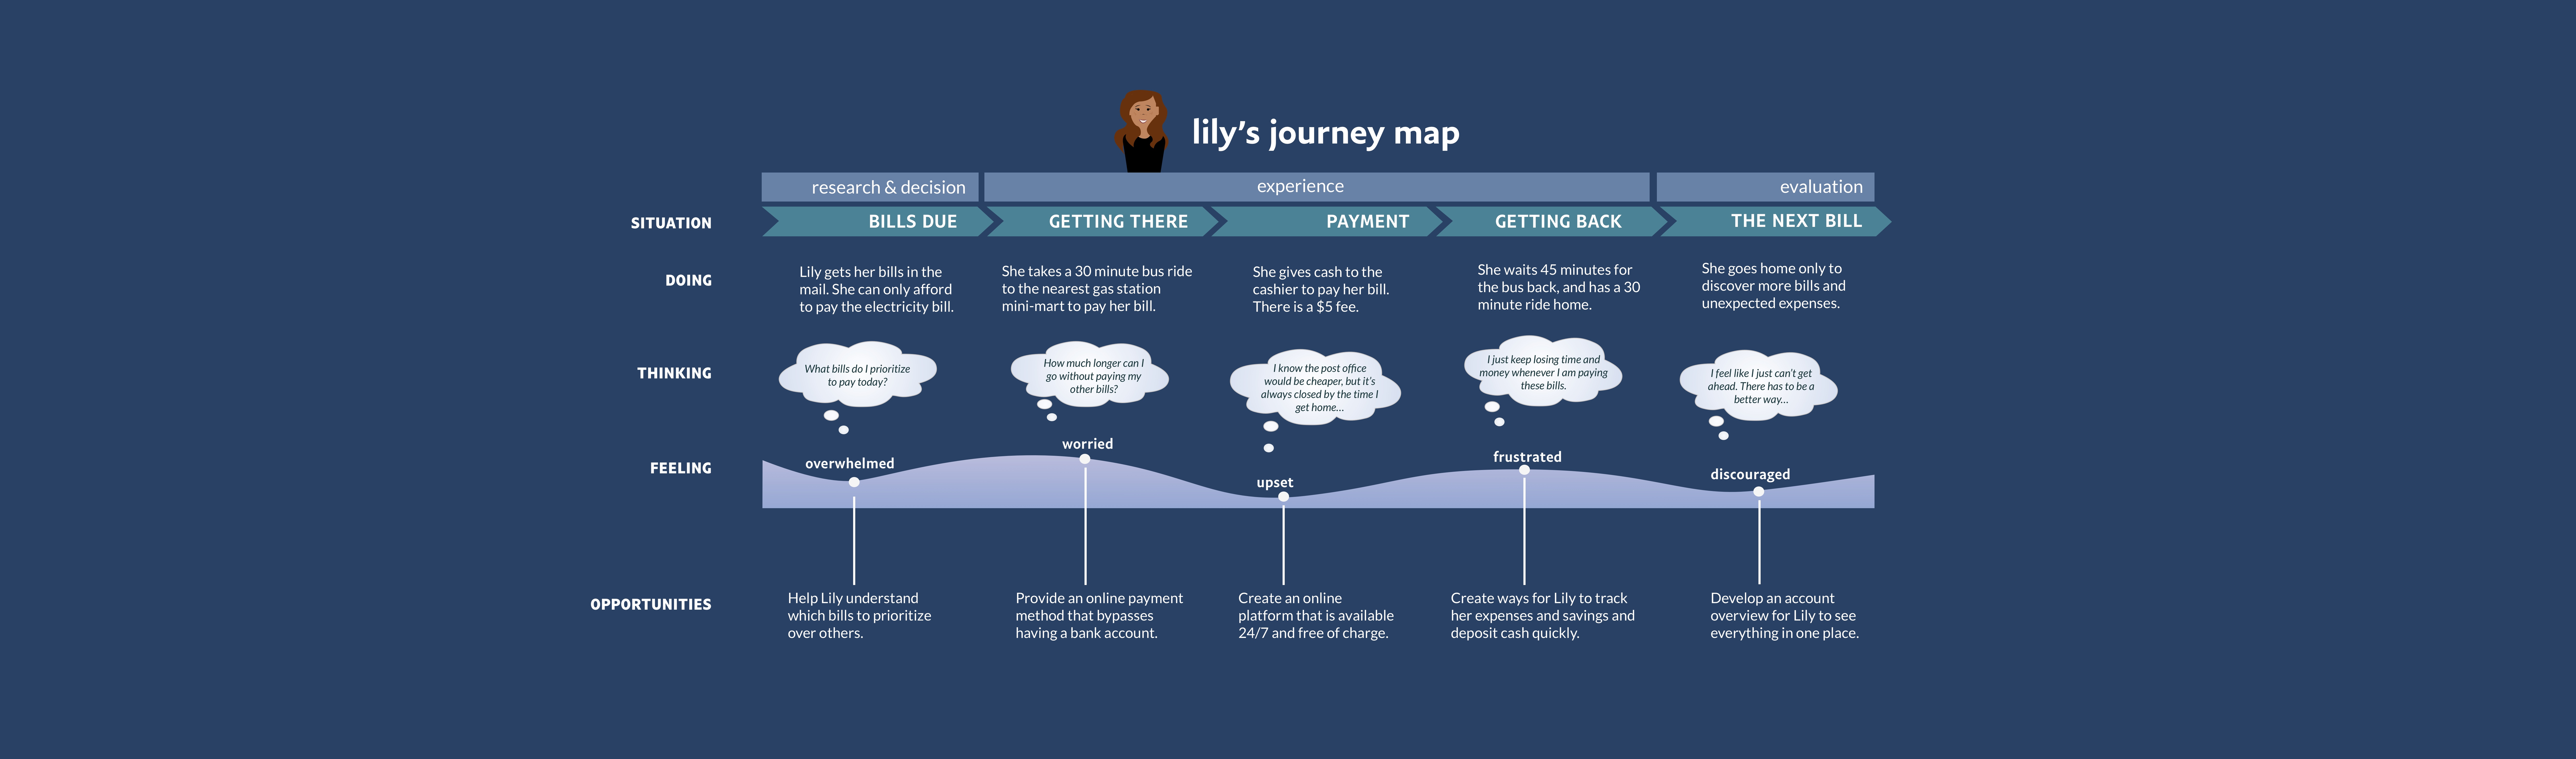 CFS-Journey-Map-3x-1